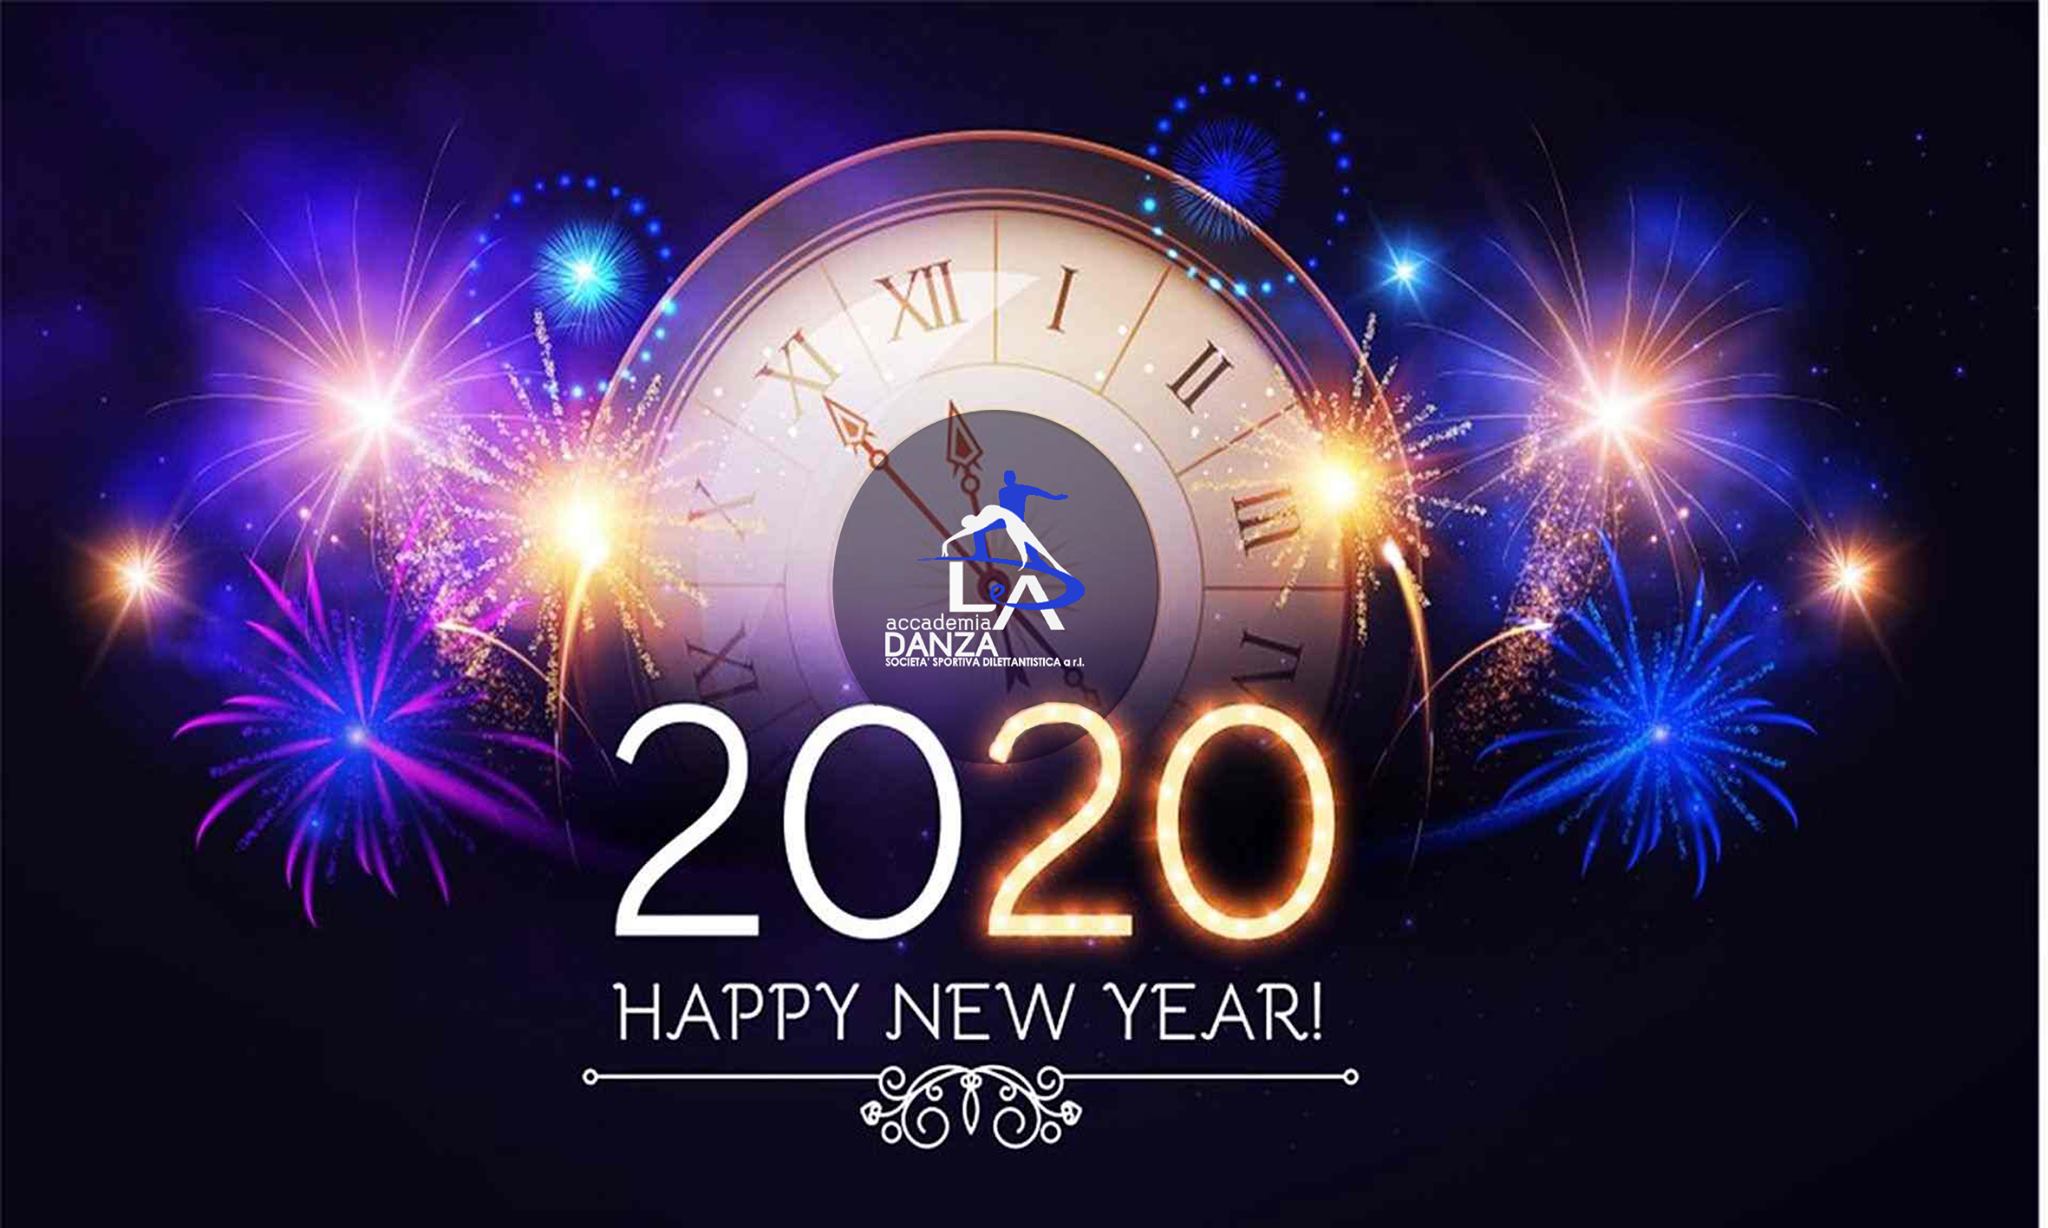 Новый год 2024 бюджетно. Новый год 2020 год. Happy New year картинки. Happy New year 2020. C yjdsv 2020 ujjv.